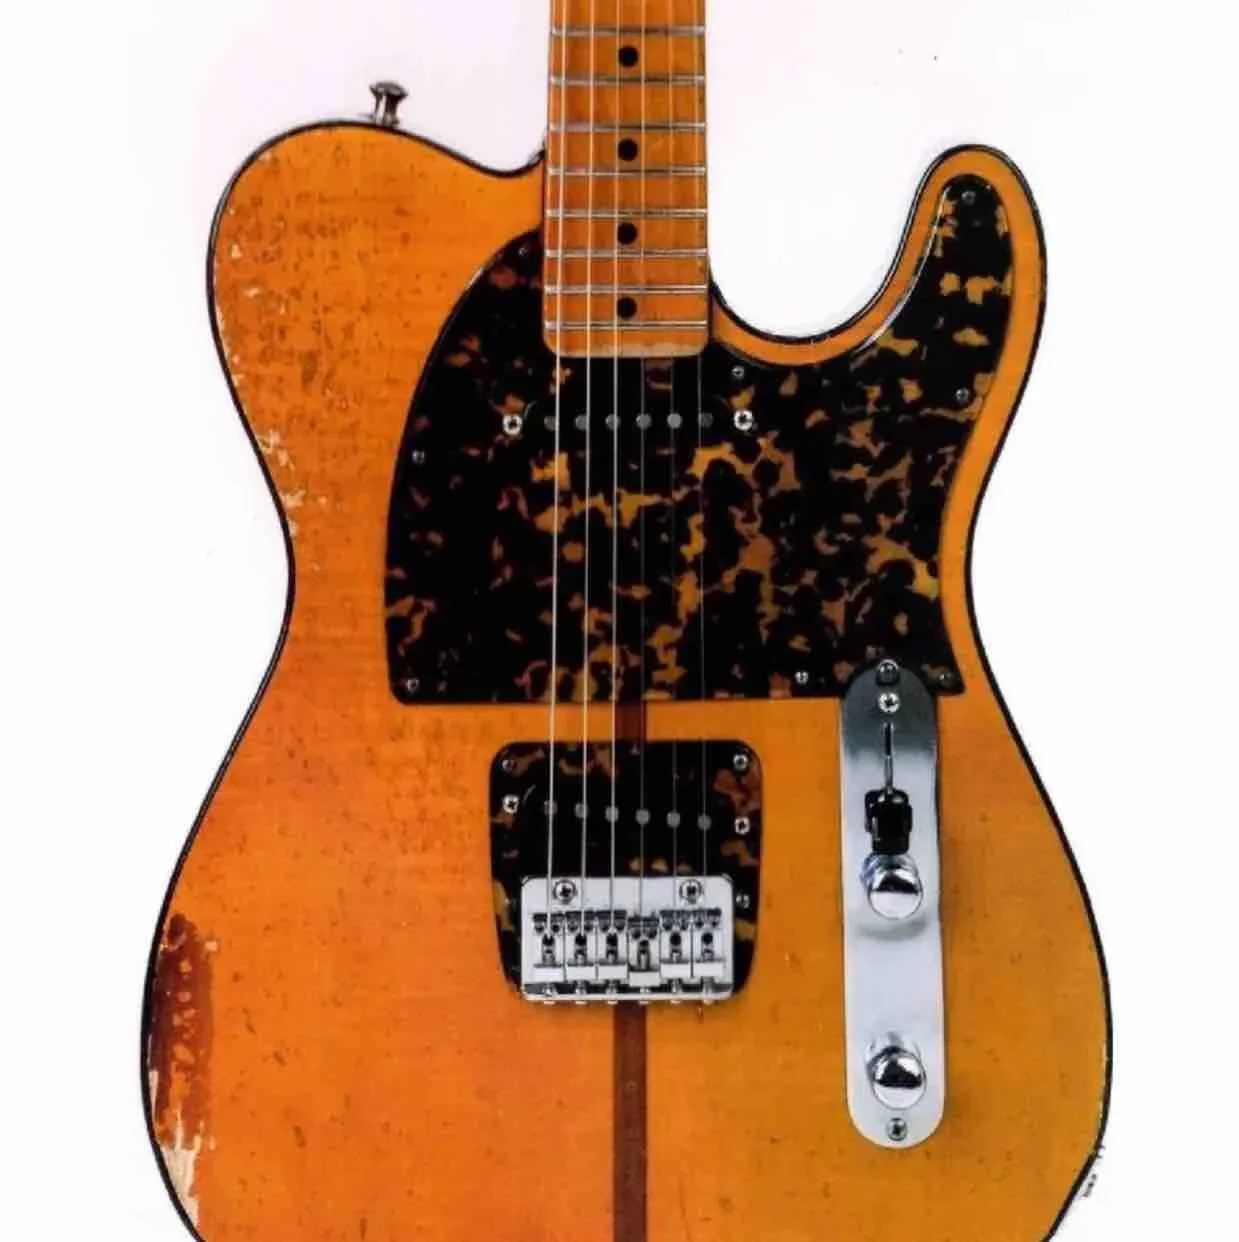 

Relic Prince Hohner HS Anderson Madcat Mad Cat Flame Maple Top электрическая гитара с логотипом Abalone, леопардовой накладкой и обвязкой